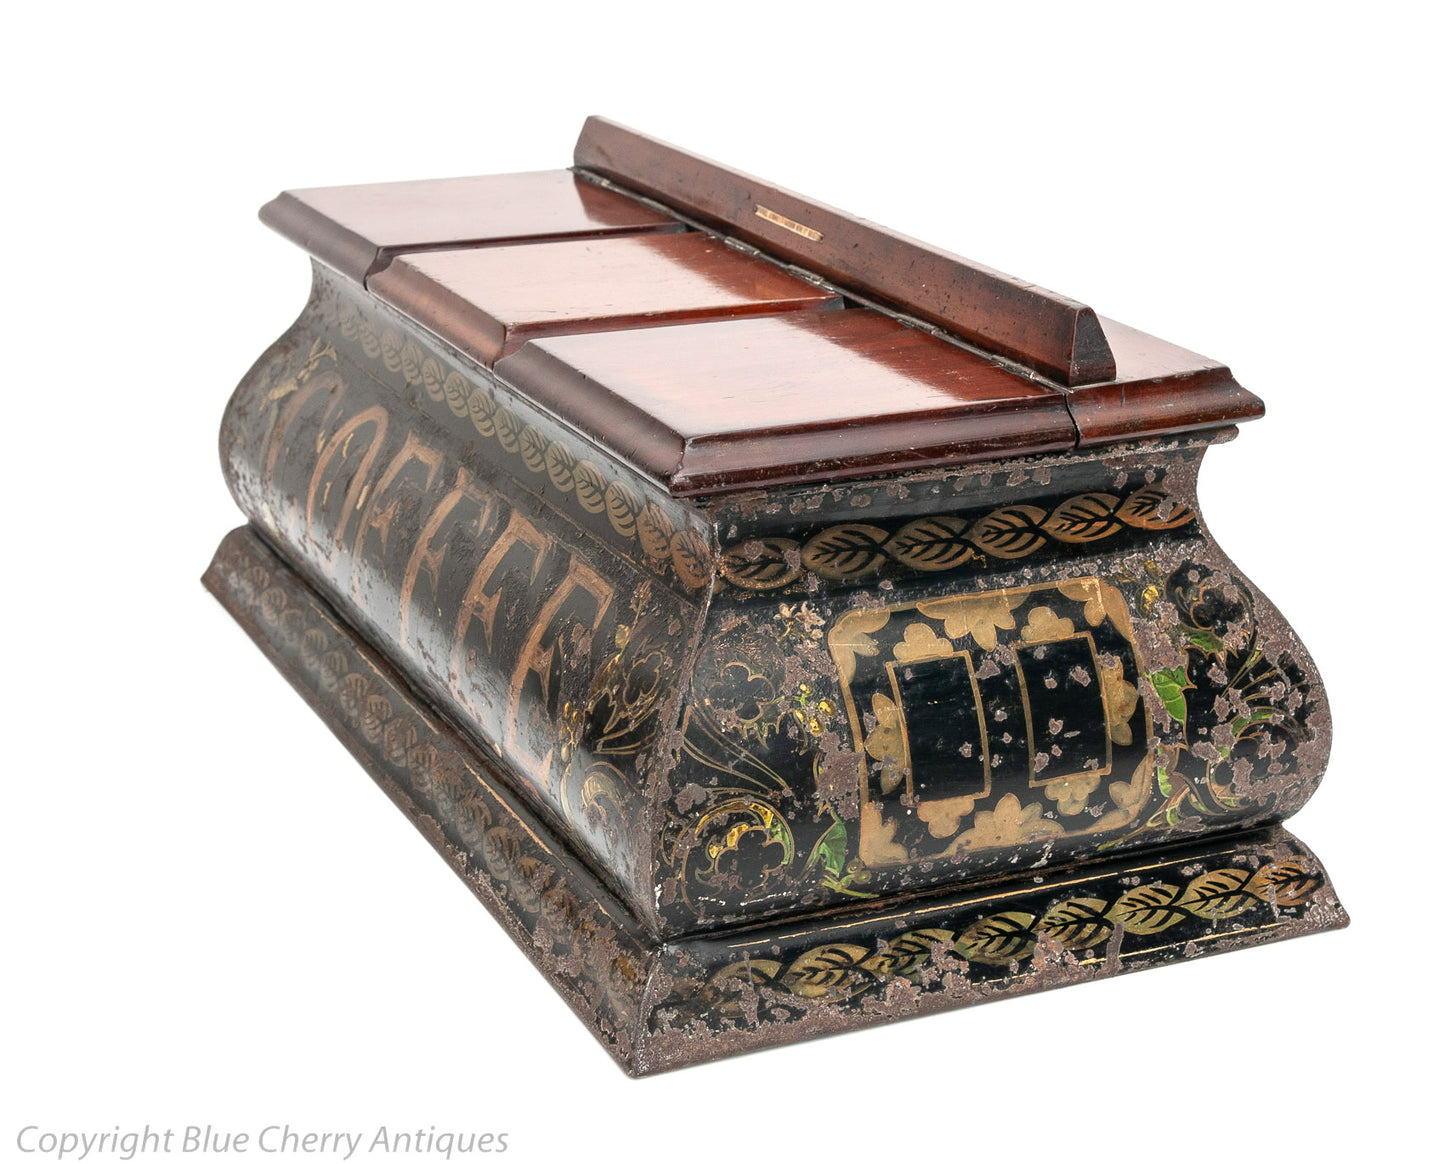 Rare Antique Parnall & Sons Toleware & Mahogany Wood Coffee Bin Box Shopfitting (Code 1631)